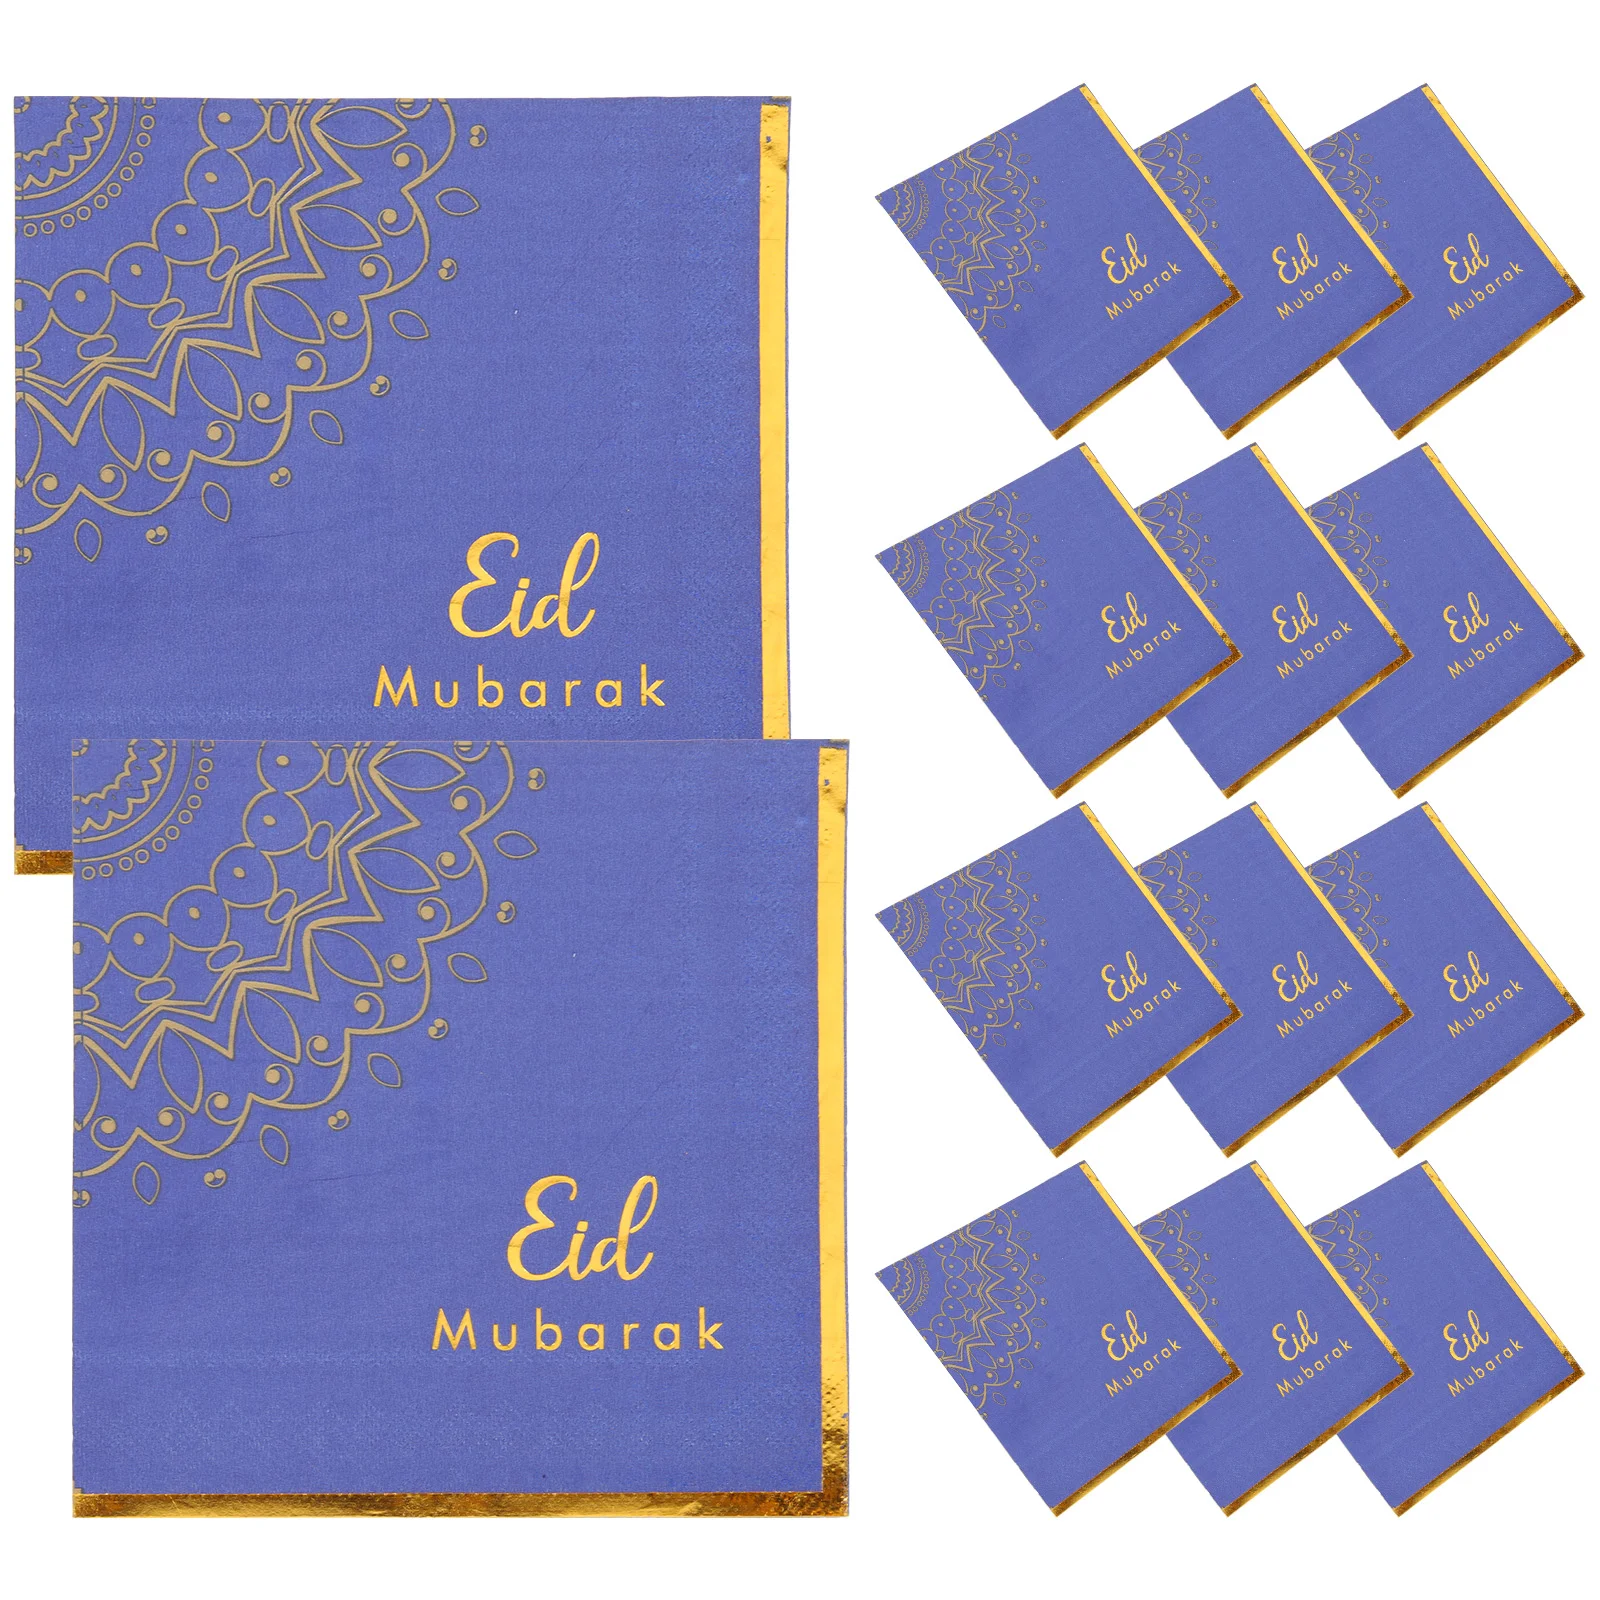 

Eid Tissue Paper Decorative Muslim Party Supplie Mubarak Guest Napkins Ramadan Eid-themed Napkin Pattern